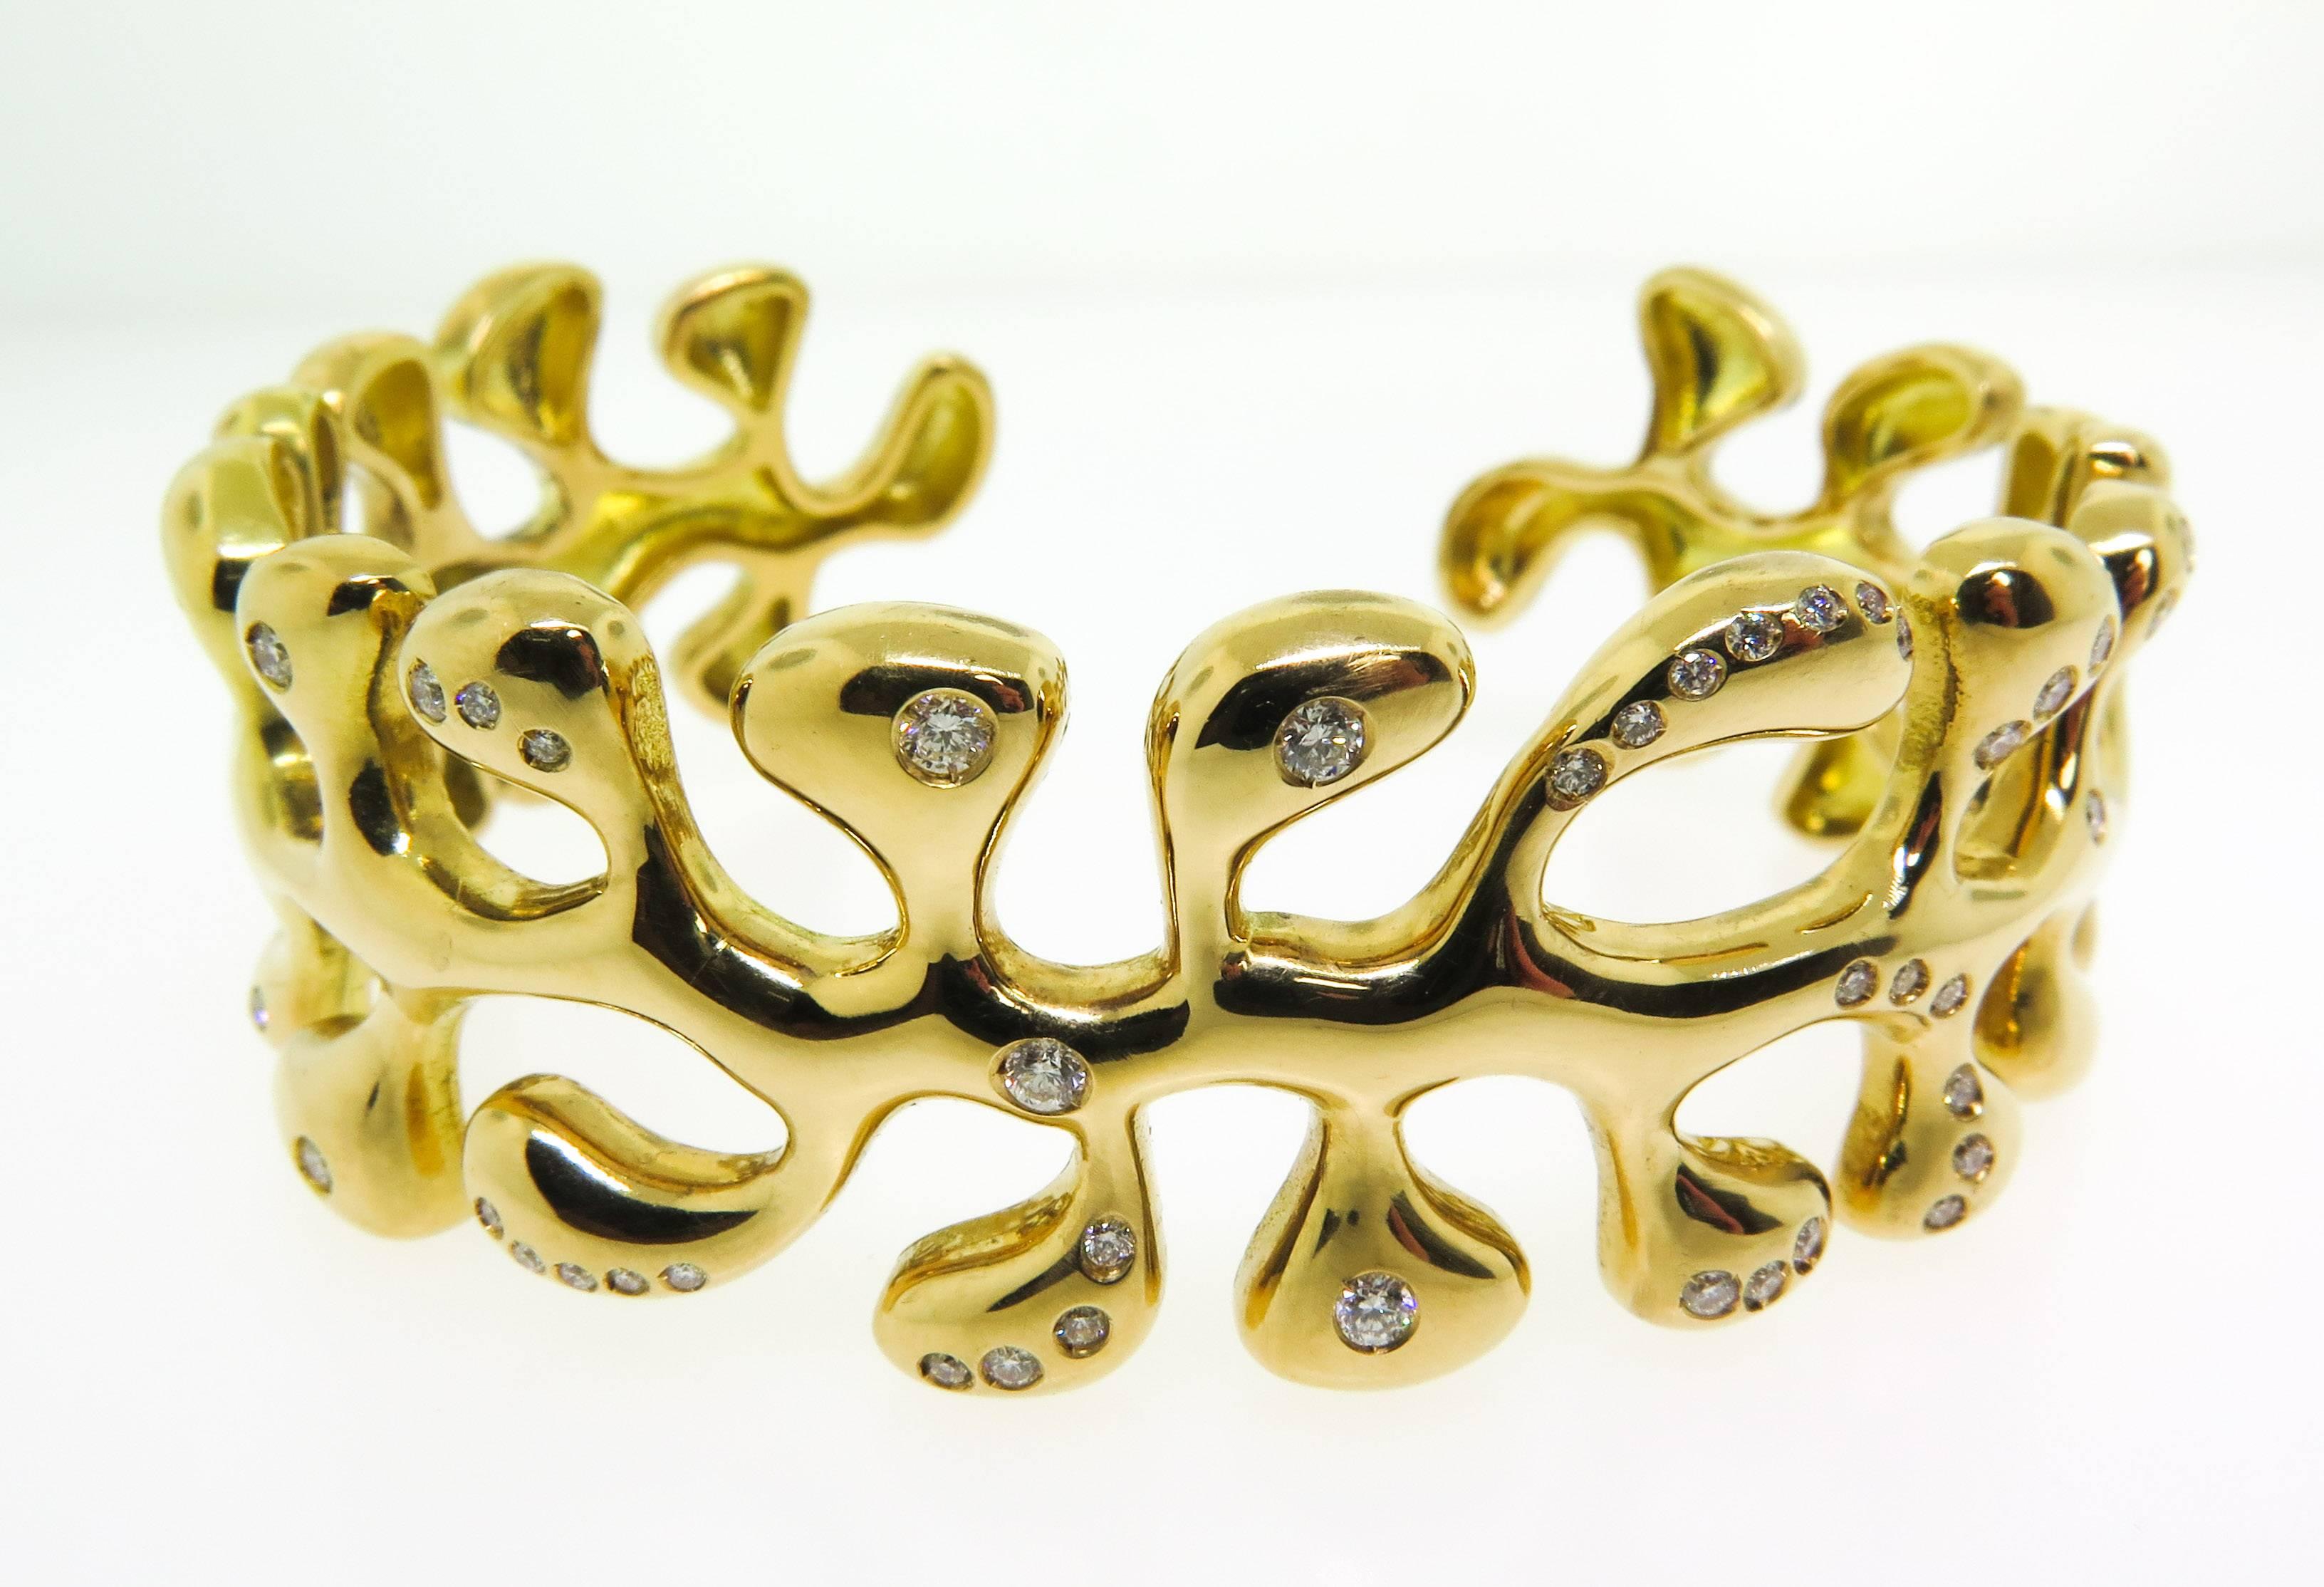 Artist Gold Sea Leaf Cuff Bracelet with Diamond Accents